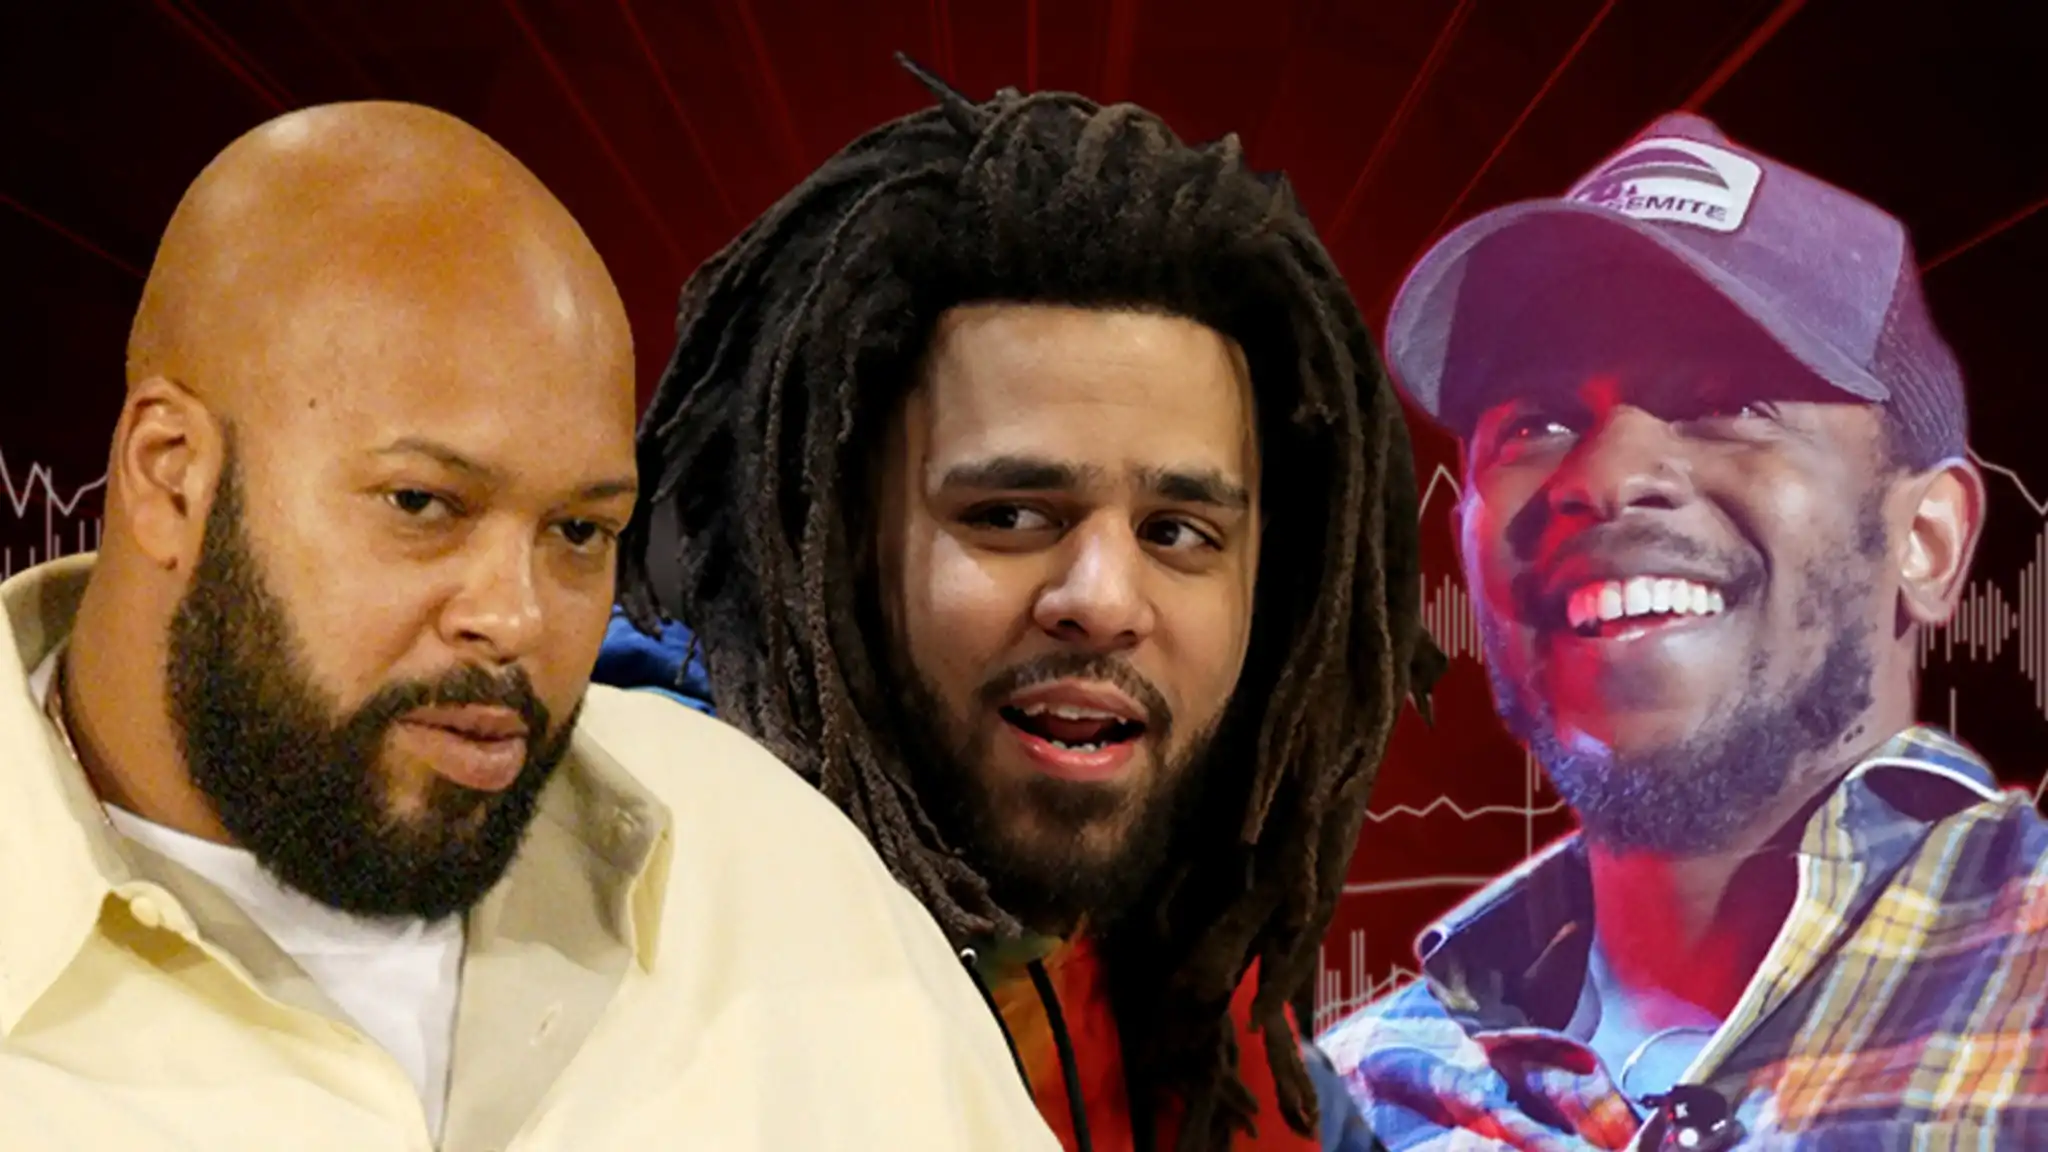 Suge Knight praises Kendrick Lamar, shames J. Cole after rap beef